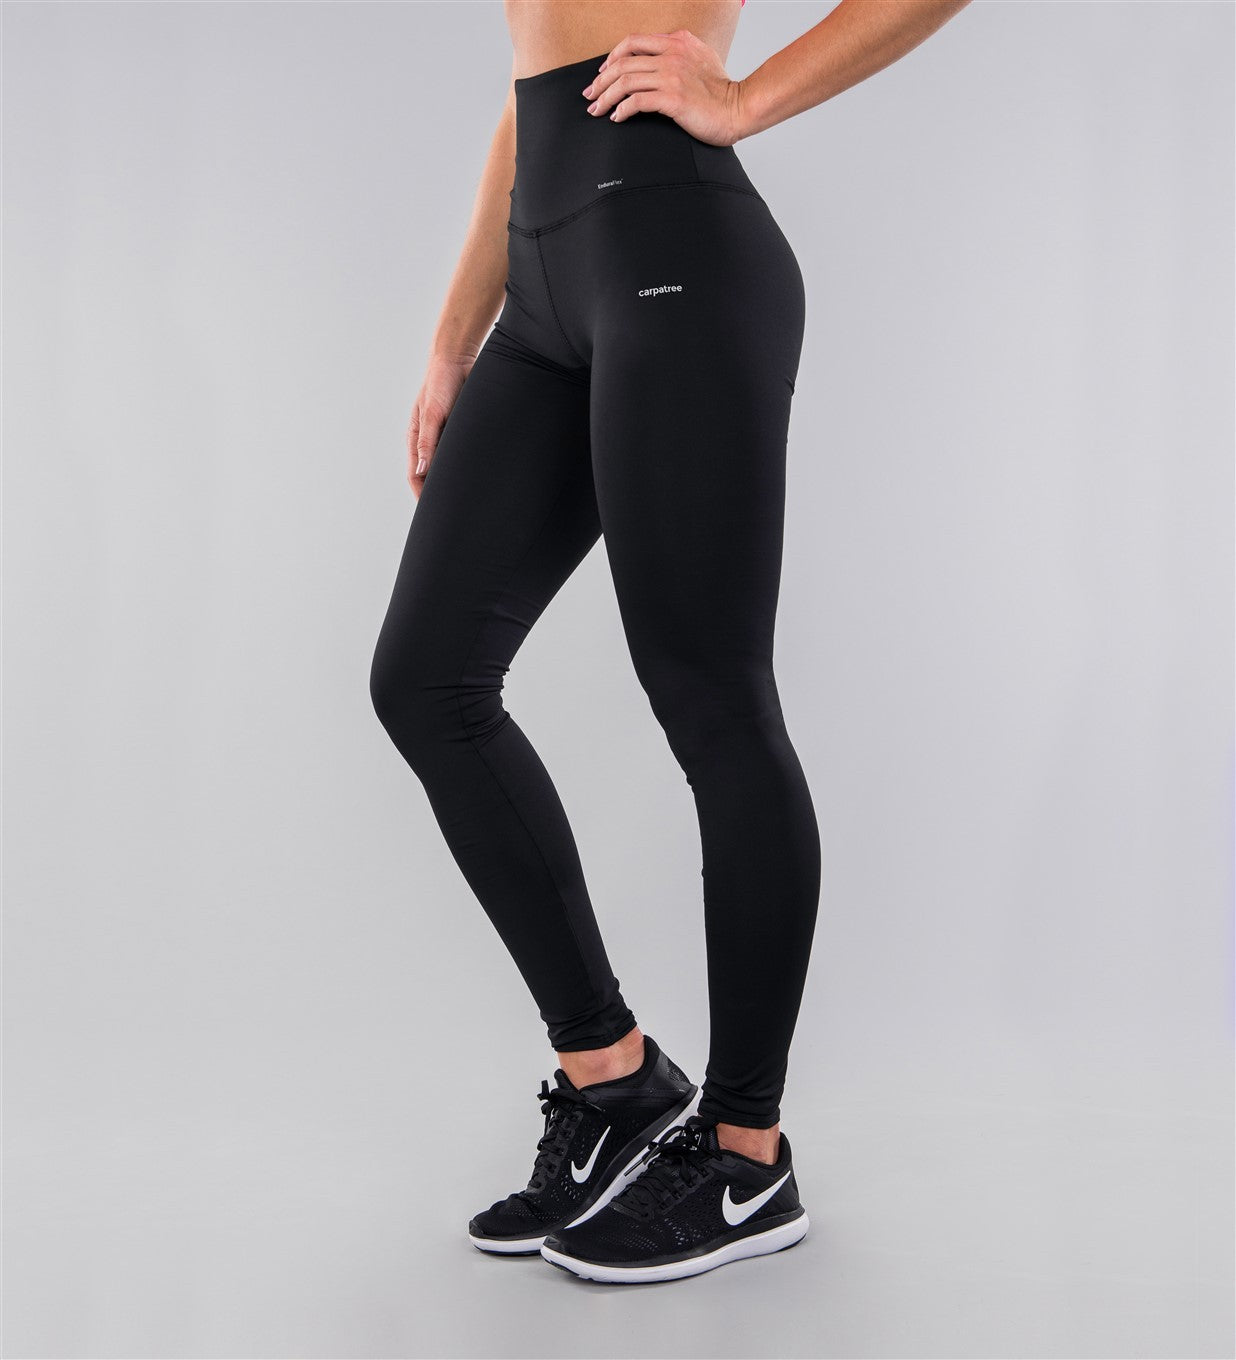 Carpatree High Waist Leggings - black high waisted sports leggings, perfect activewear